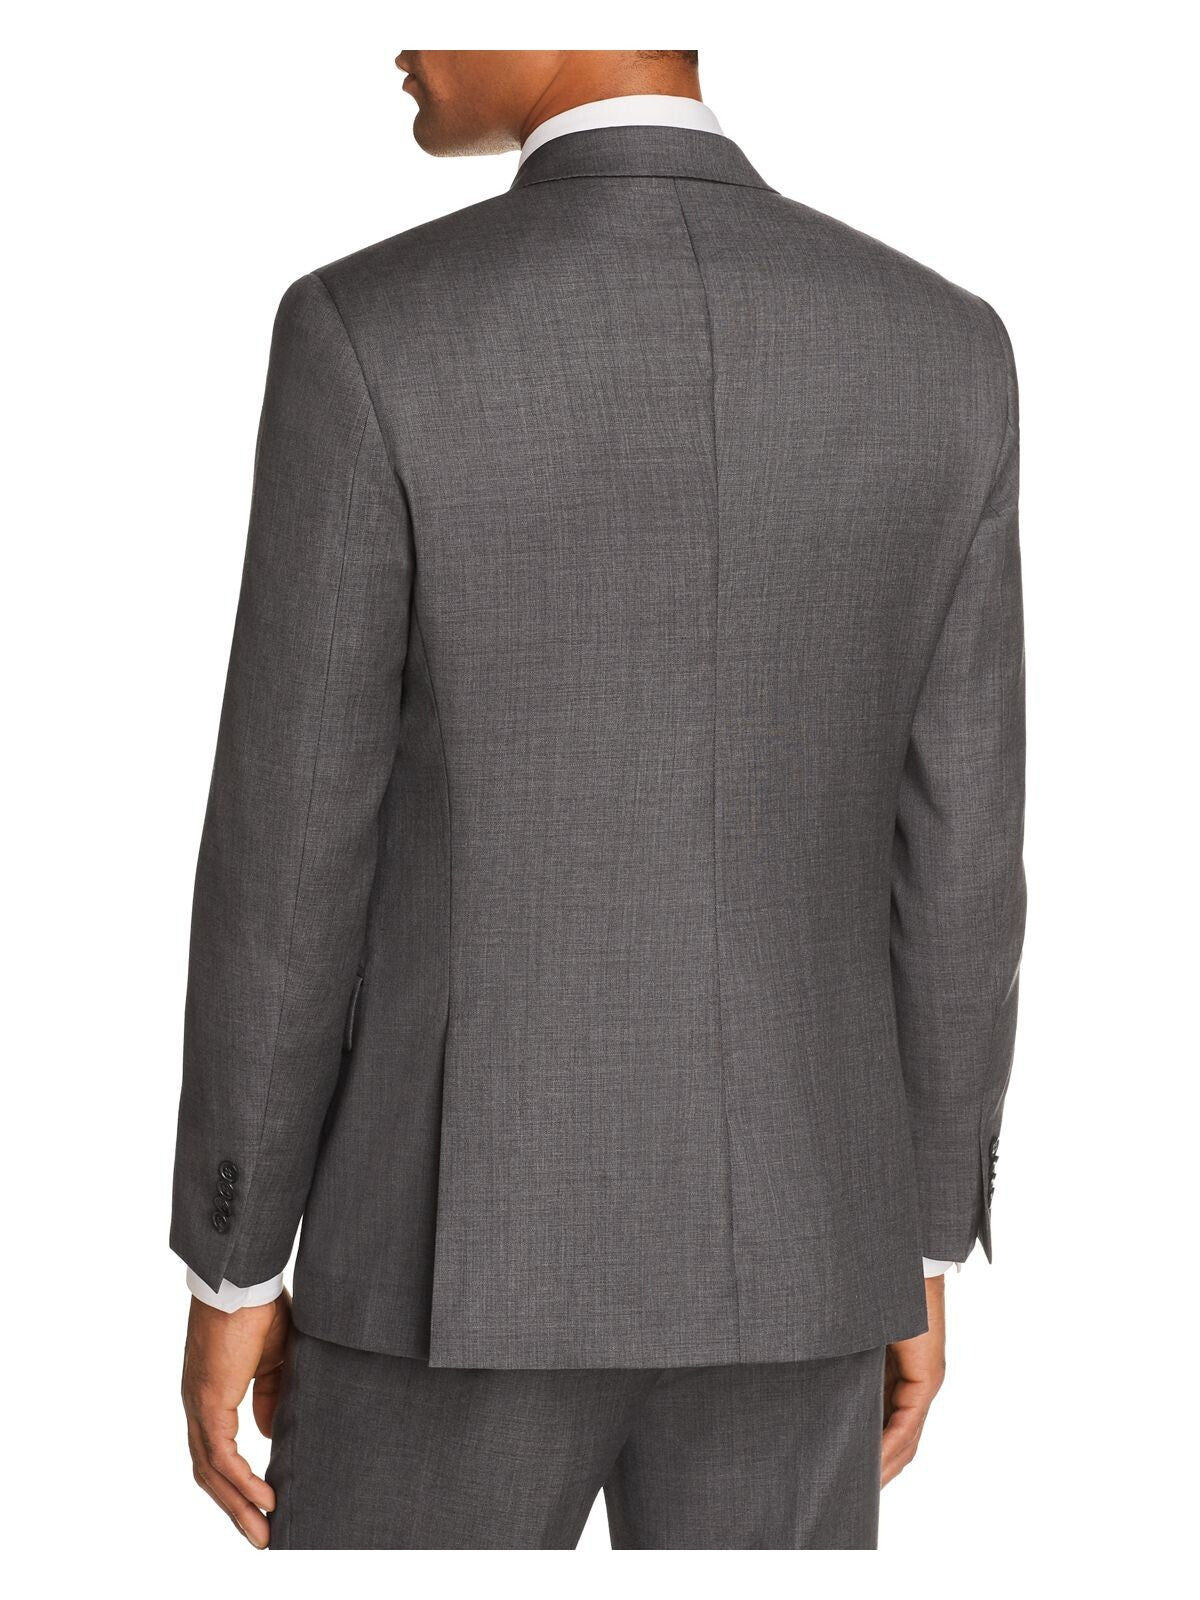 MICHAEL KORS Mens Sharkskin Gray Single Breasted, Classic Fit Wool Blend Blazer 38S